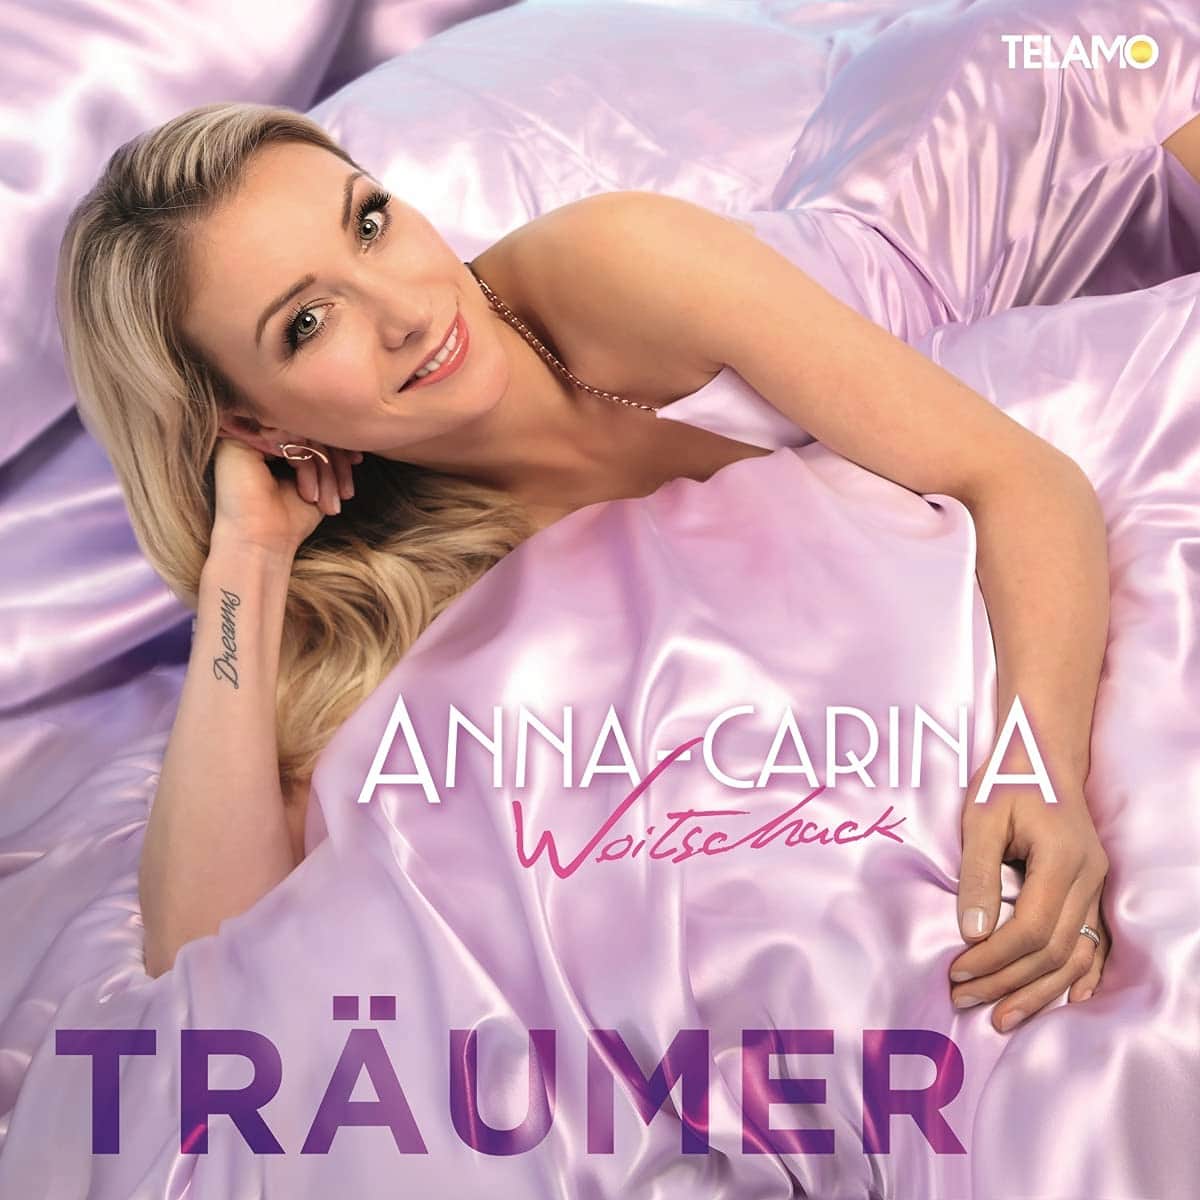 Anna-Carina Woitschack CD Träumer 2021 - Neues Cover